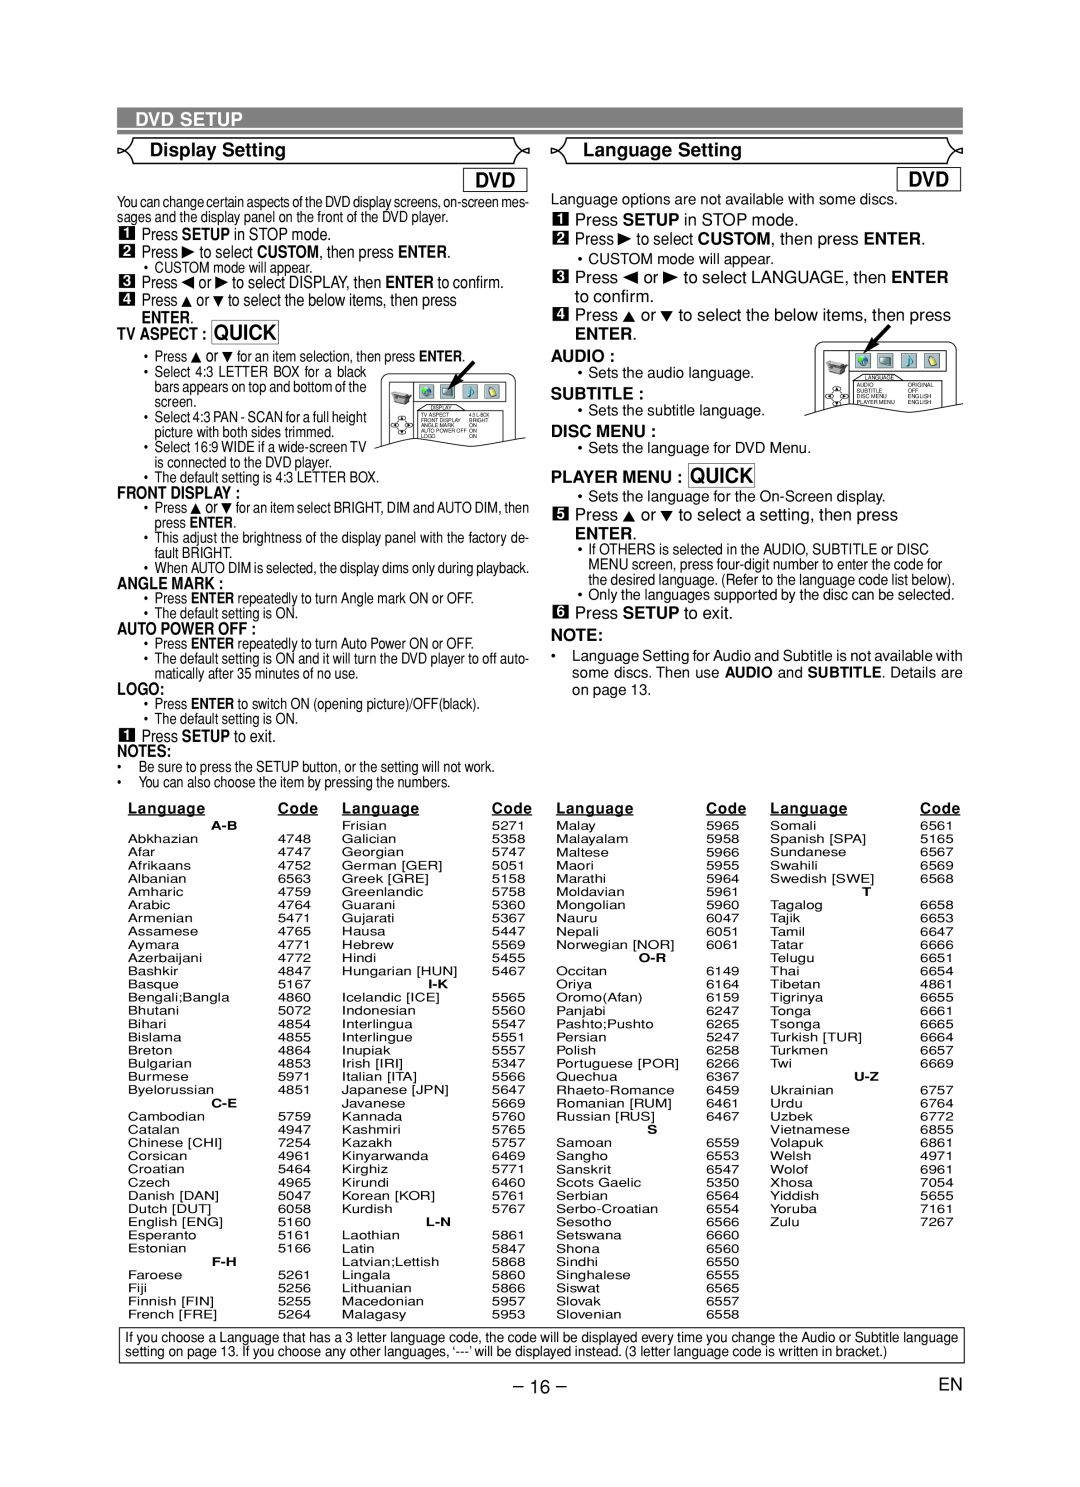 Hitachi DVP735U instruction manual Display Setting, Dvd Setup, Code 